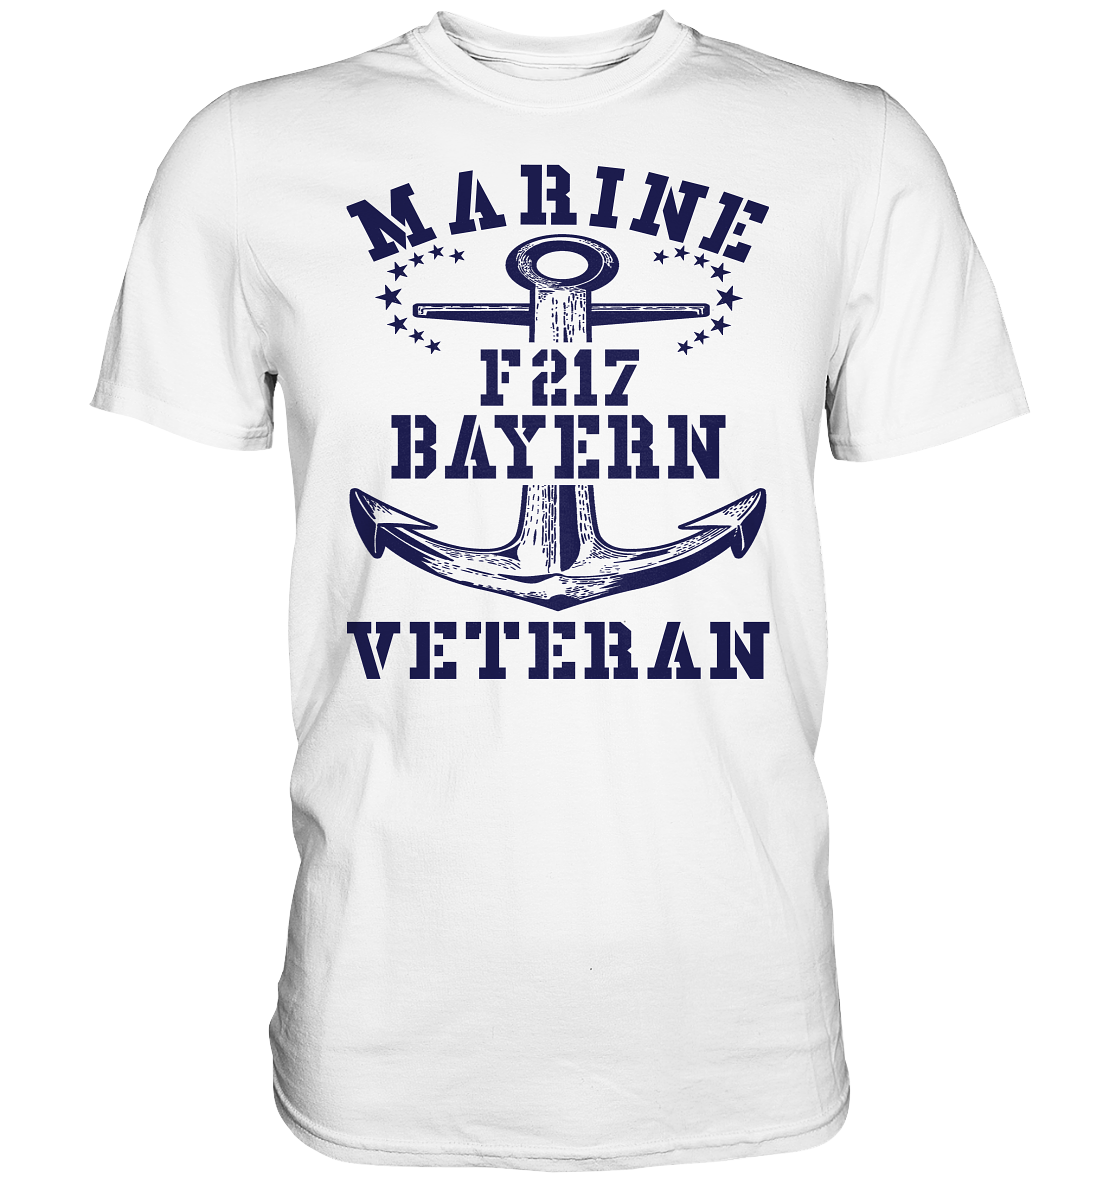 Fregatte F217 BAYERN Marine Veteran - Premium Shirt